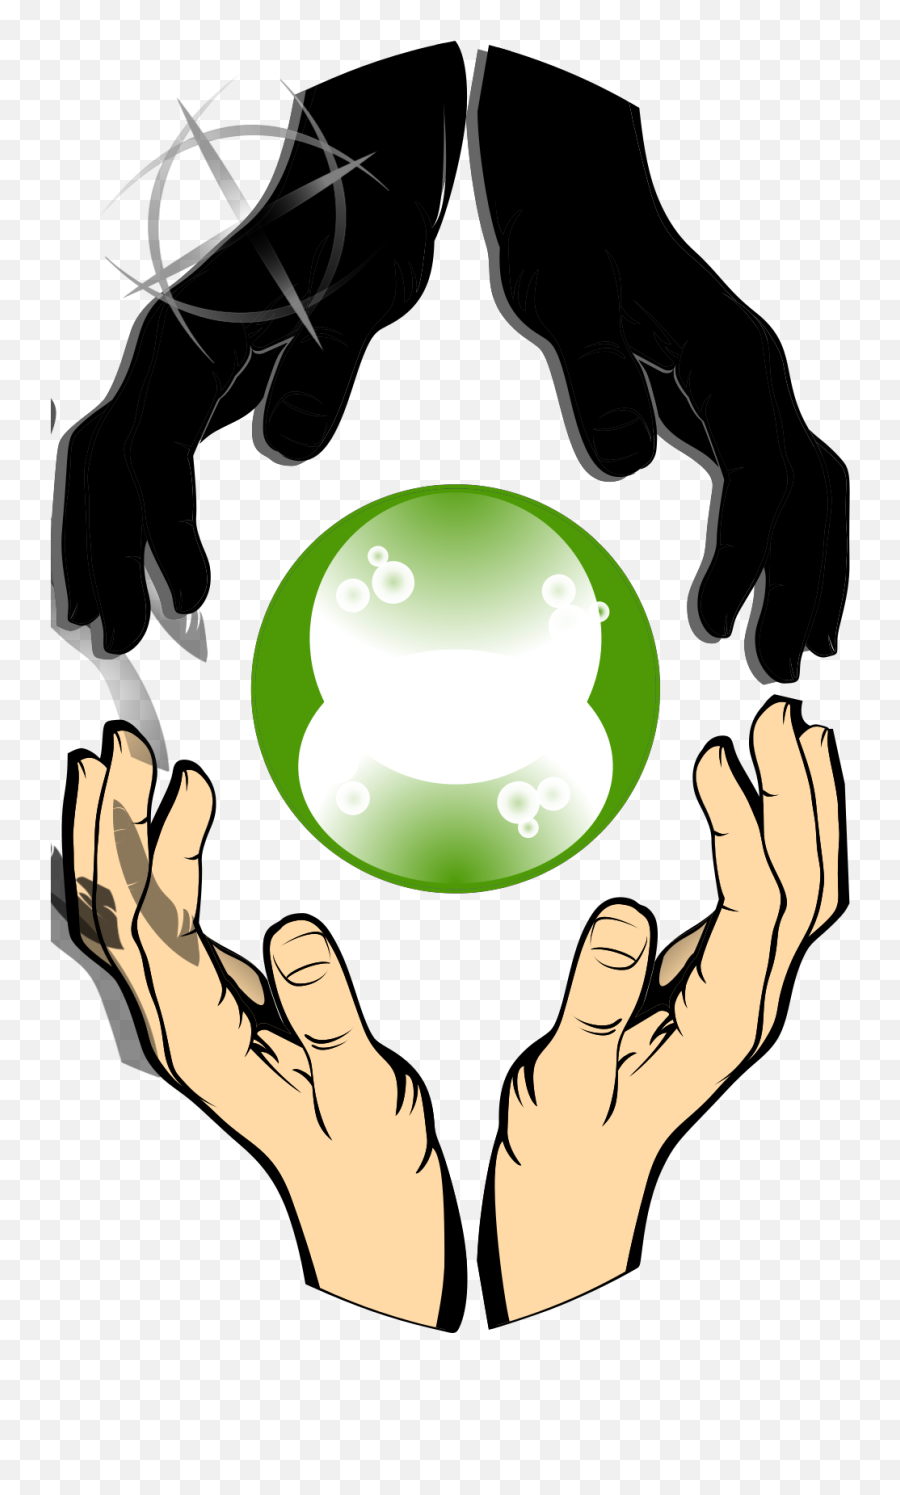 Hands Forming Unity Svg Vector Hands Forming Unity Clip Art Emoji,Giving Hands Clipart